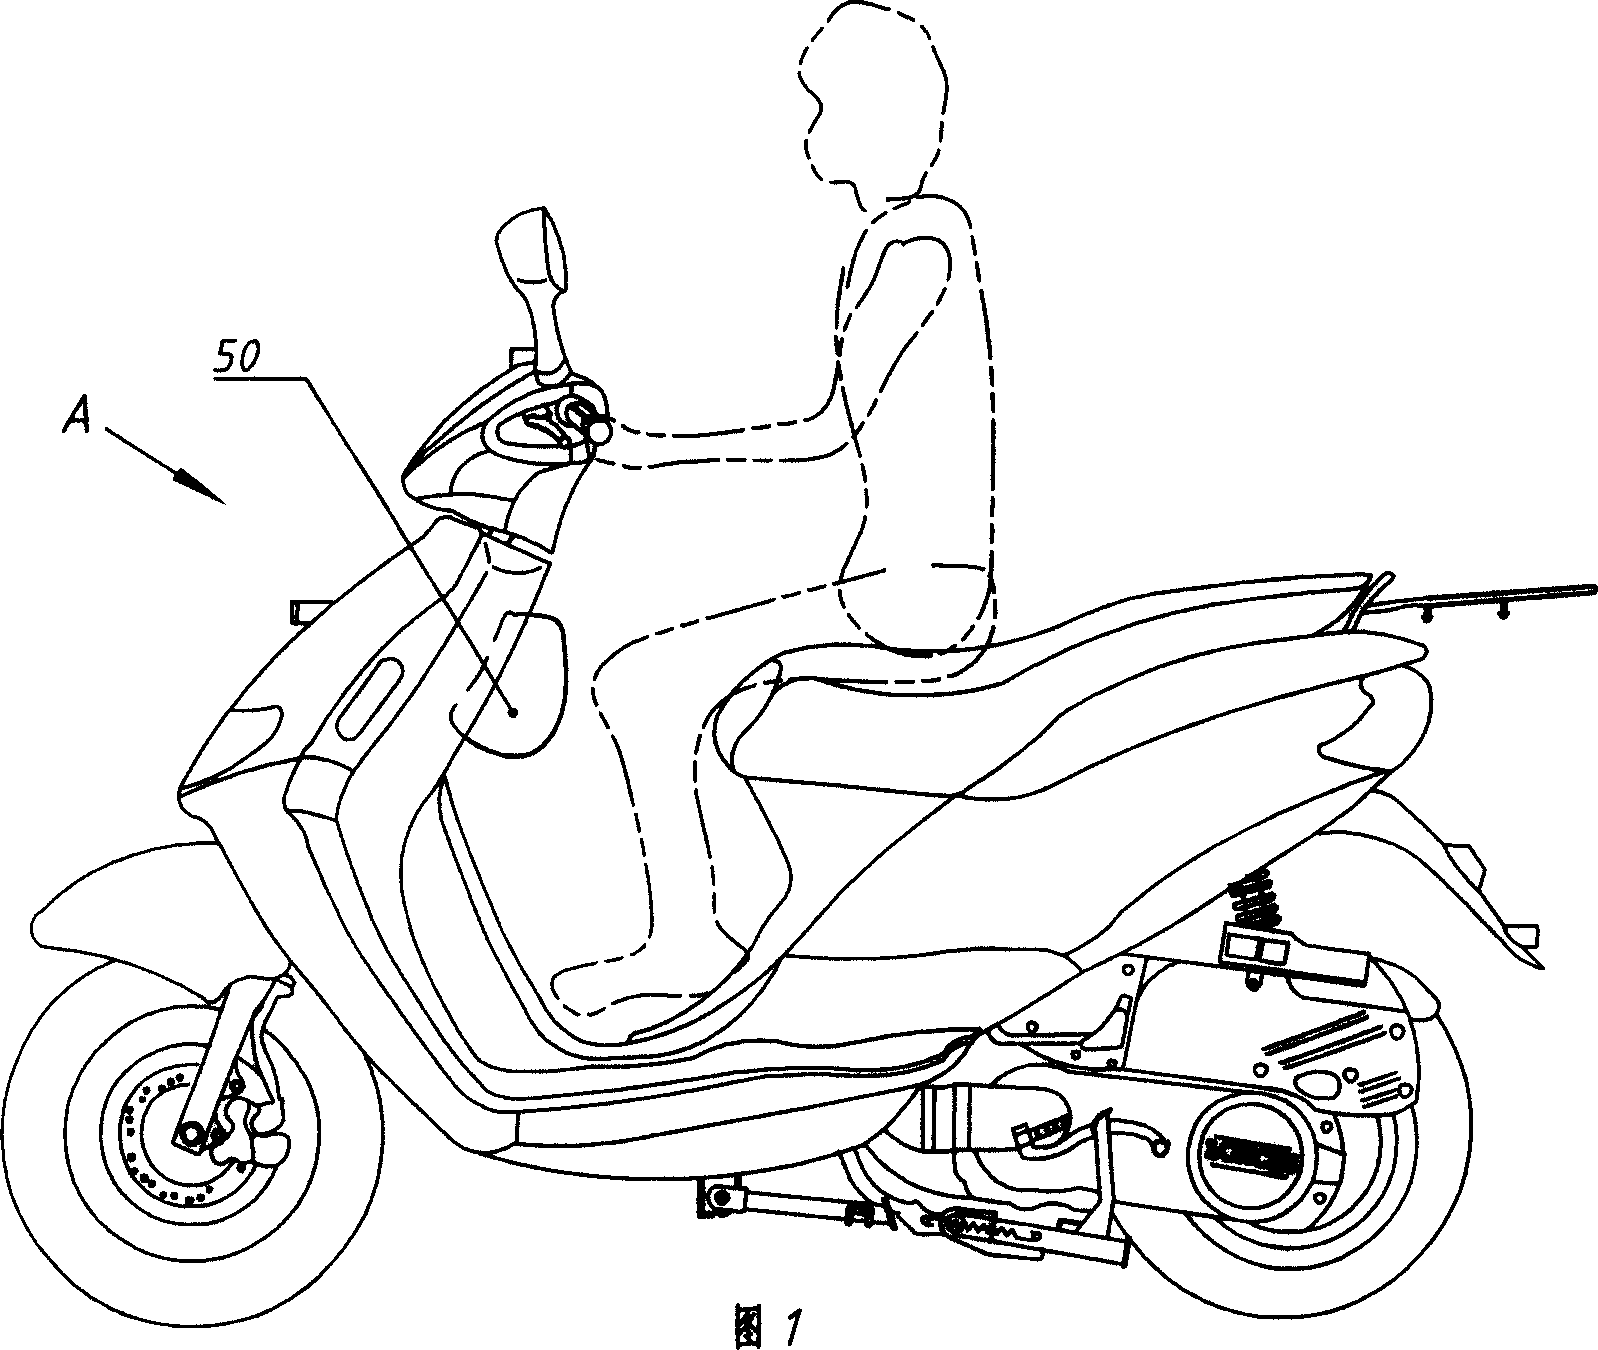 Motorcycle knee damping gasket support bracket